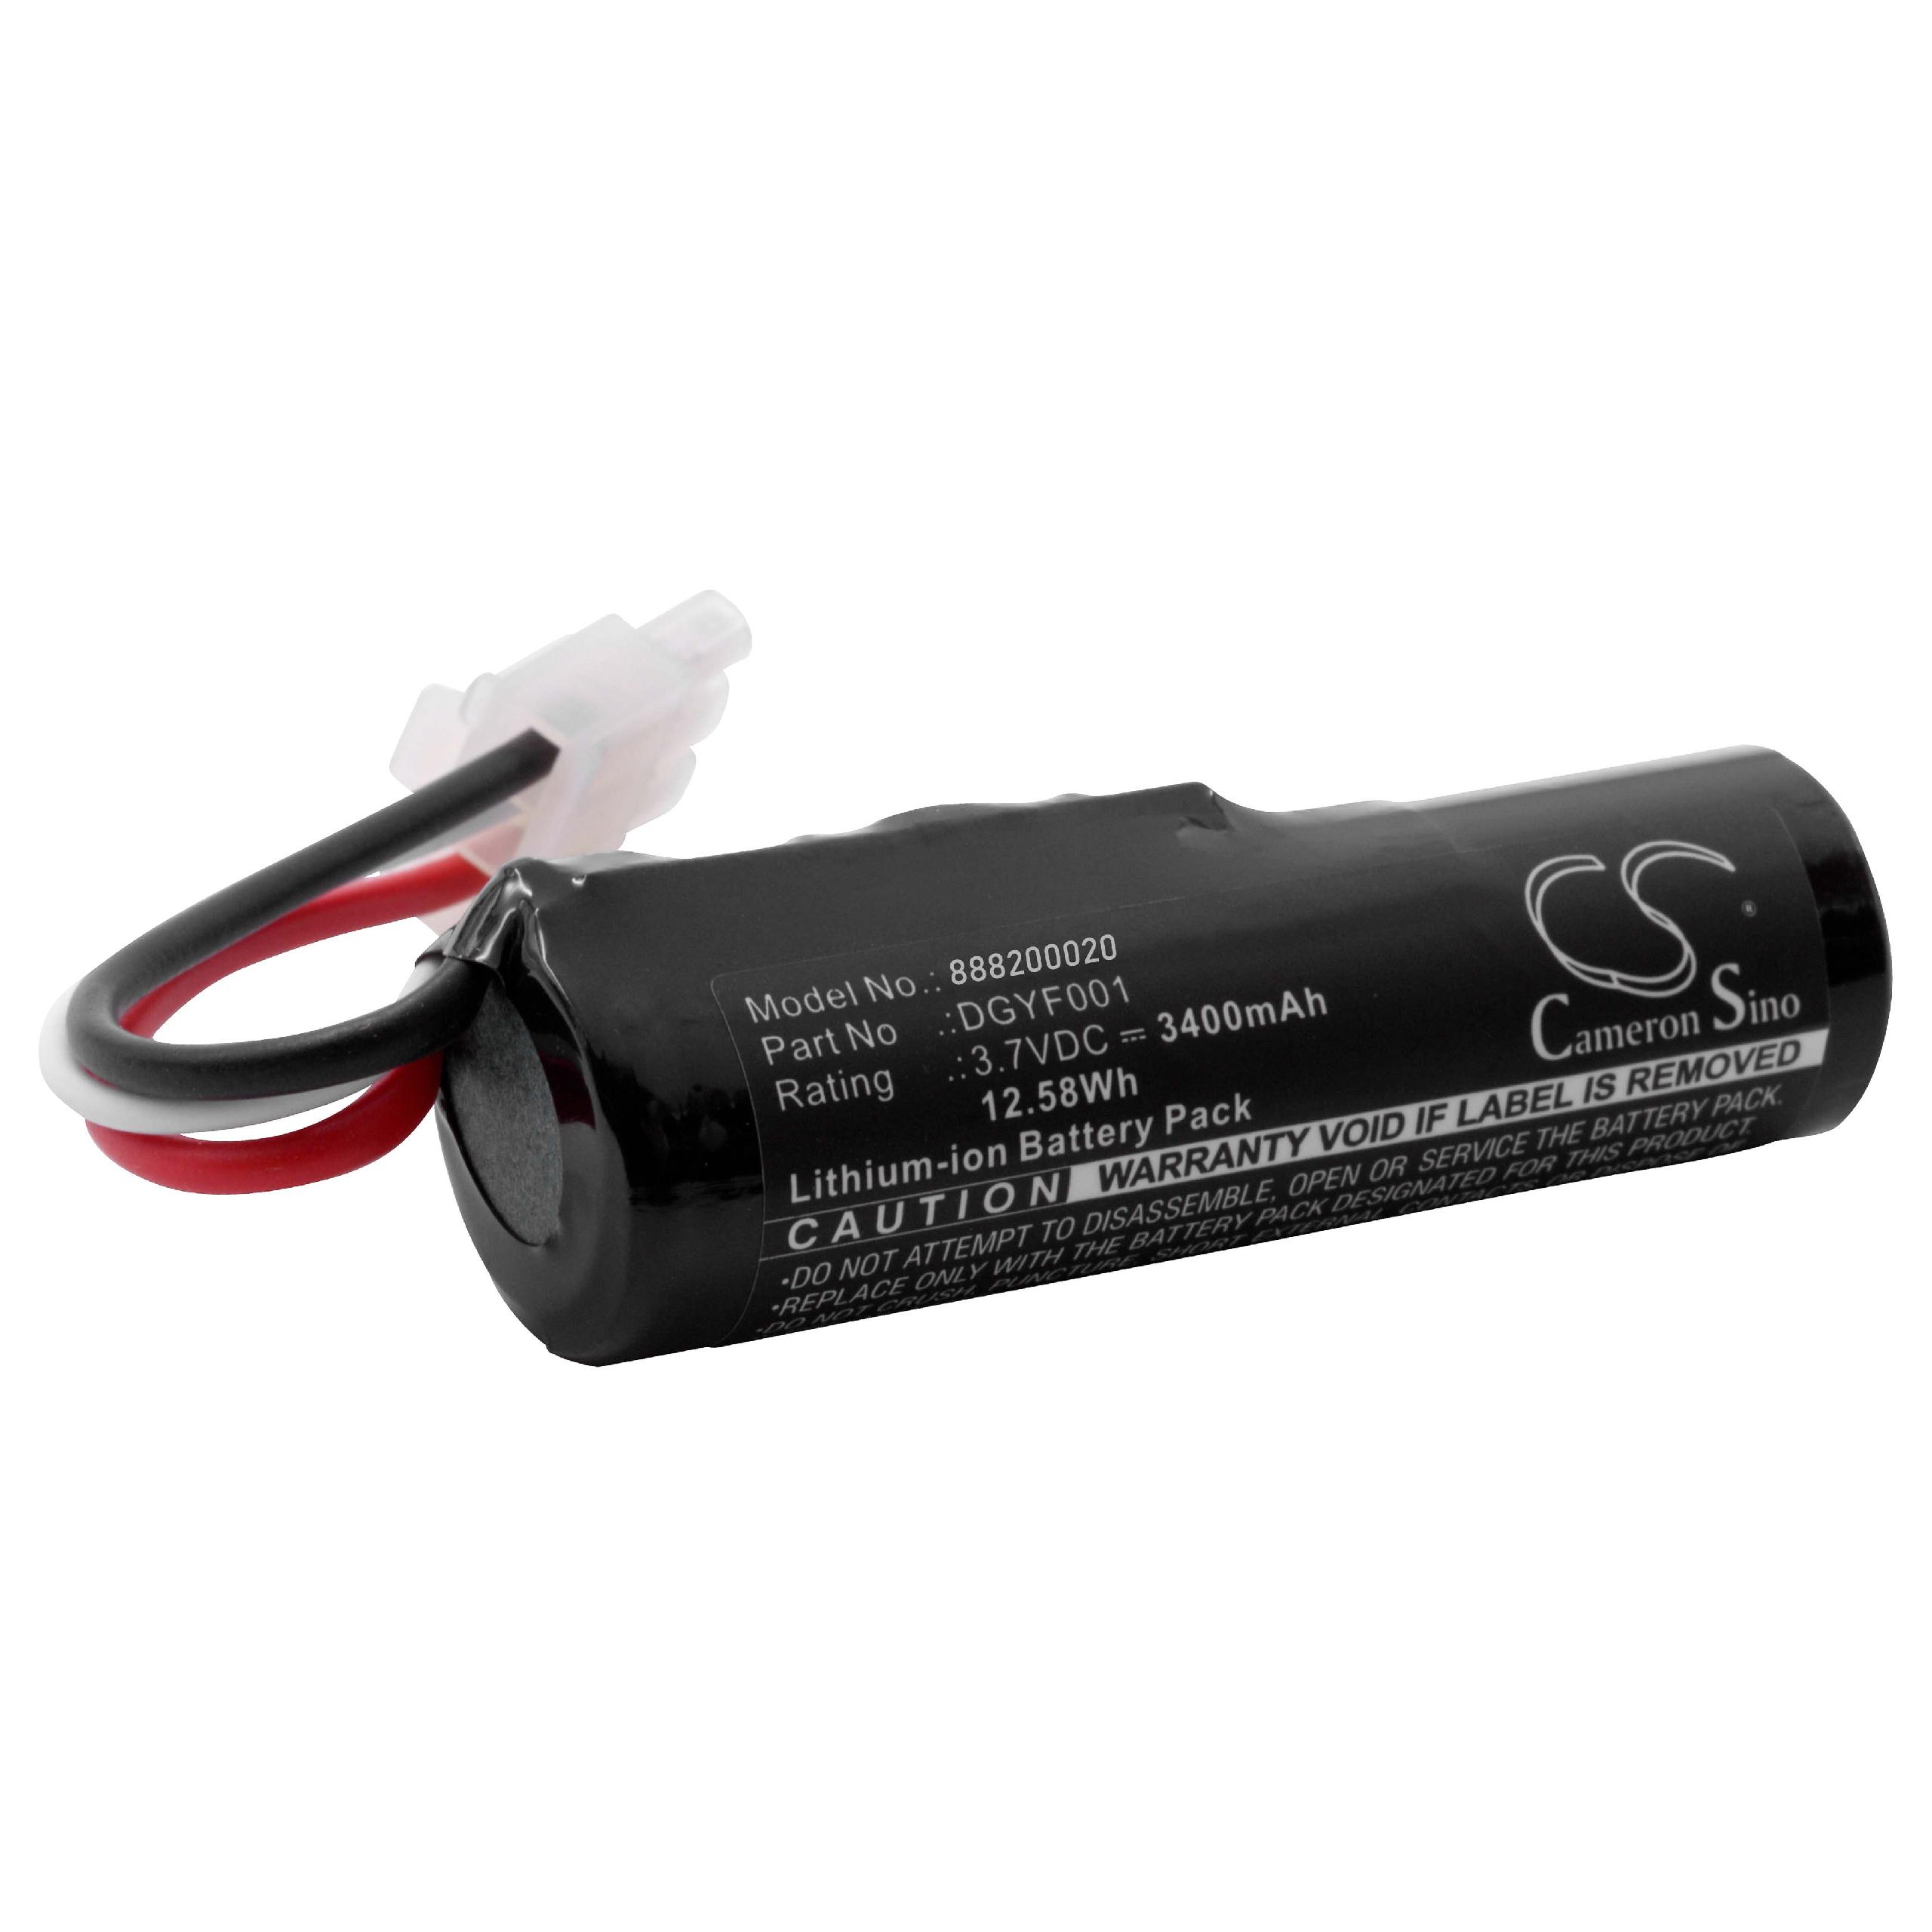 Batería reemplaza Logitech GPRLO18SY002, DGYF001, 533-000096 para altavoces Logitech - 3400 mAh 3,7 V Li-Ion